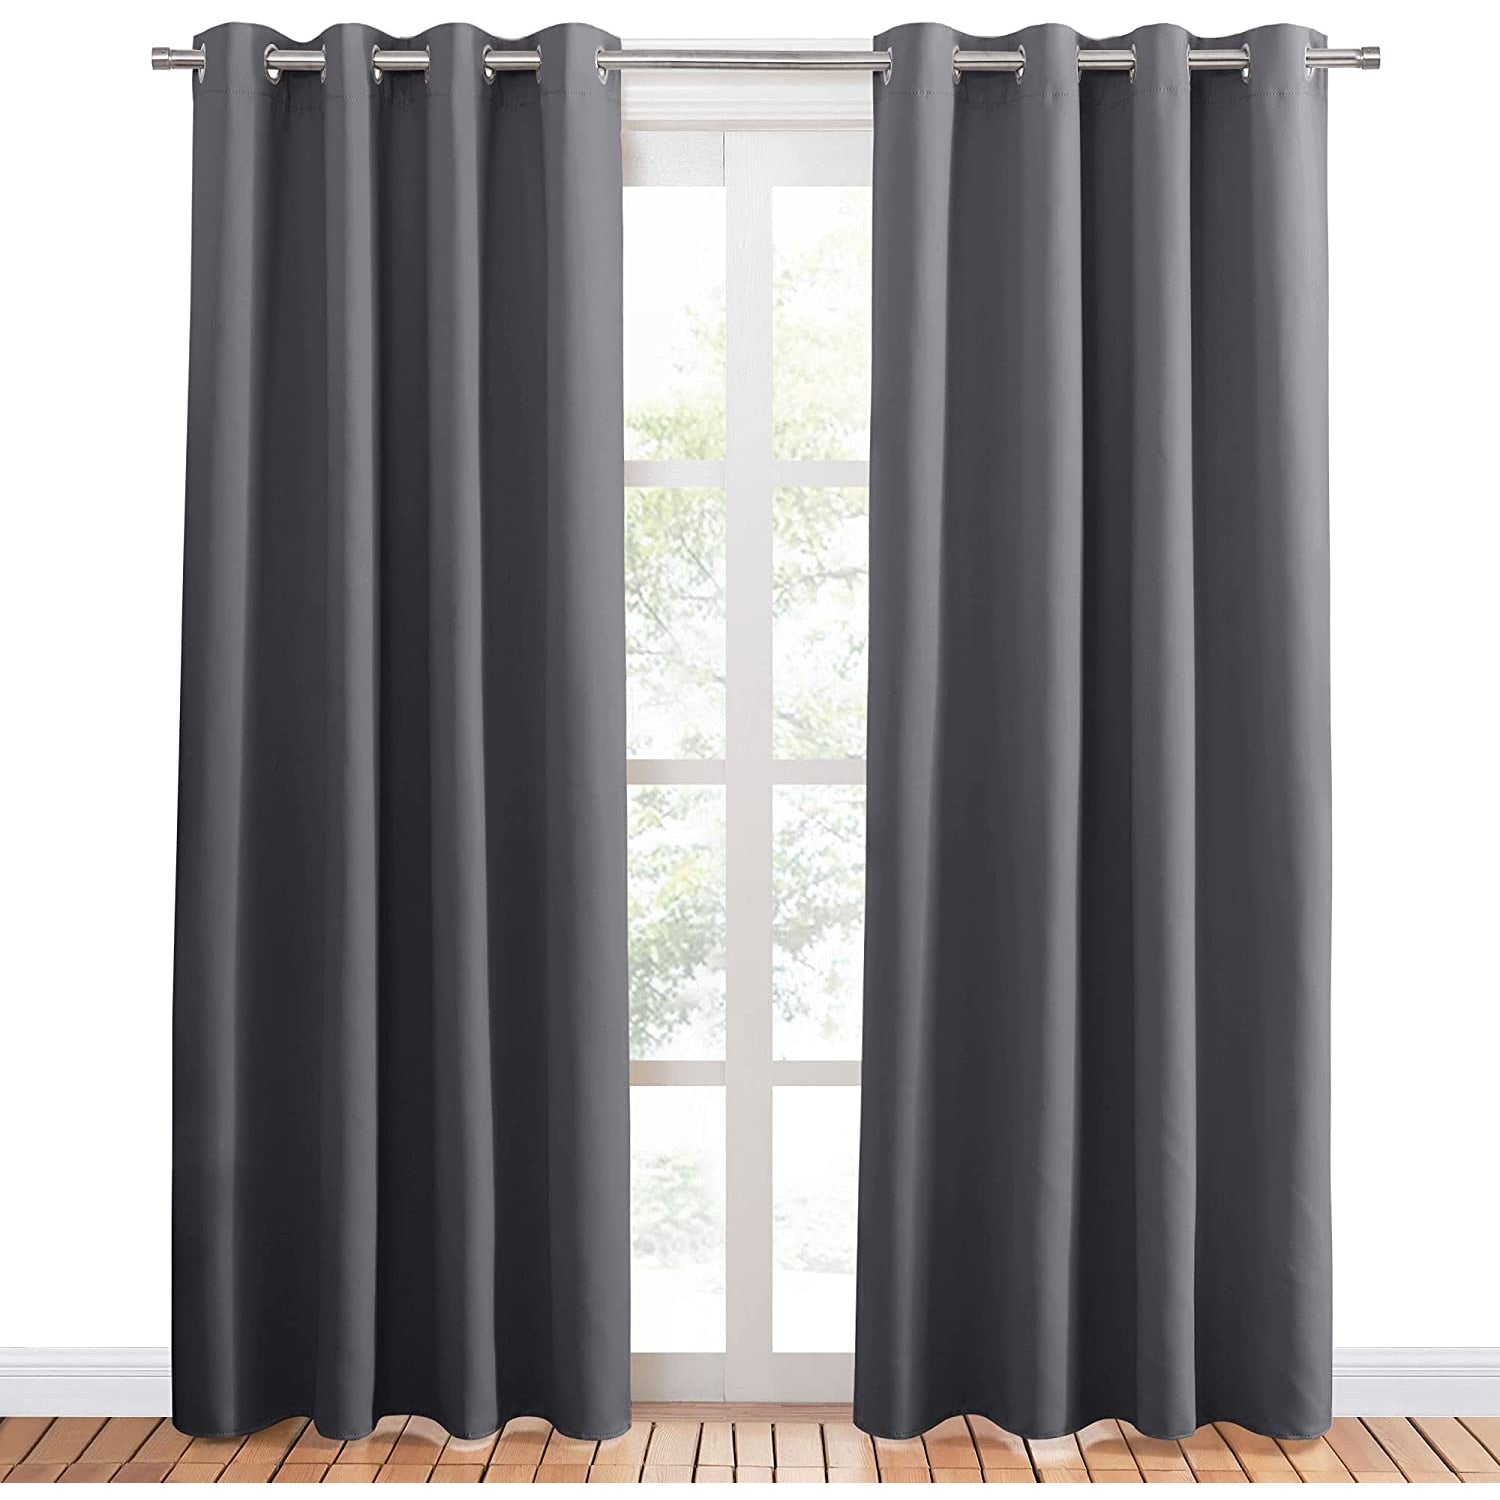 Pony Dance Blackout Curtains - Grey, W 52 x 84 in, 2 Pieces